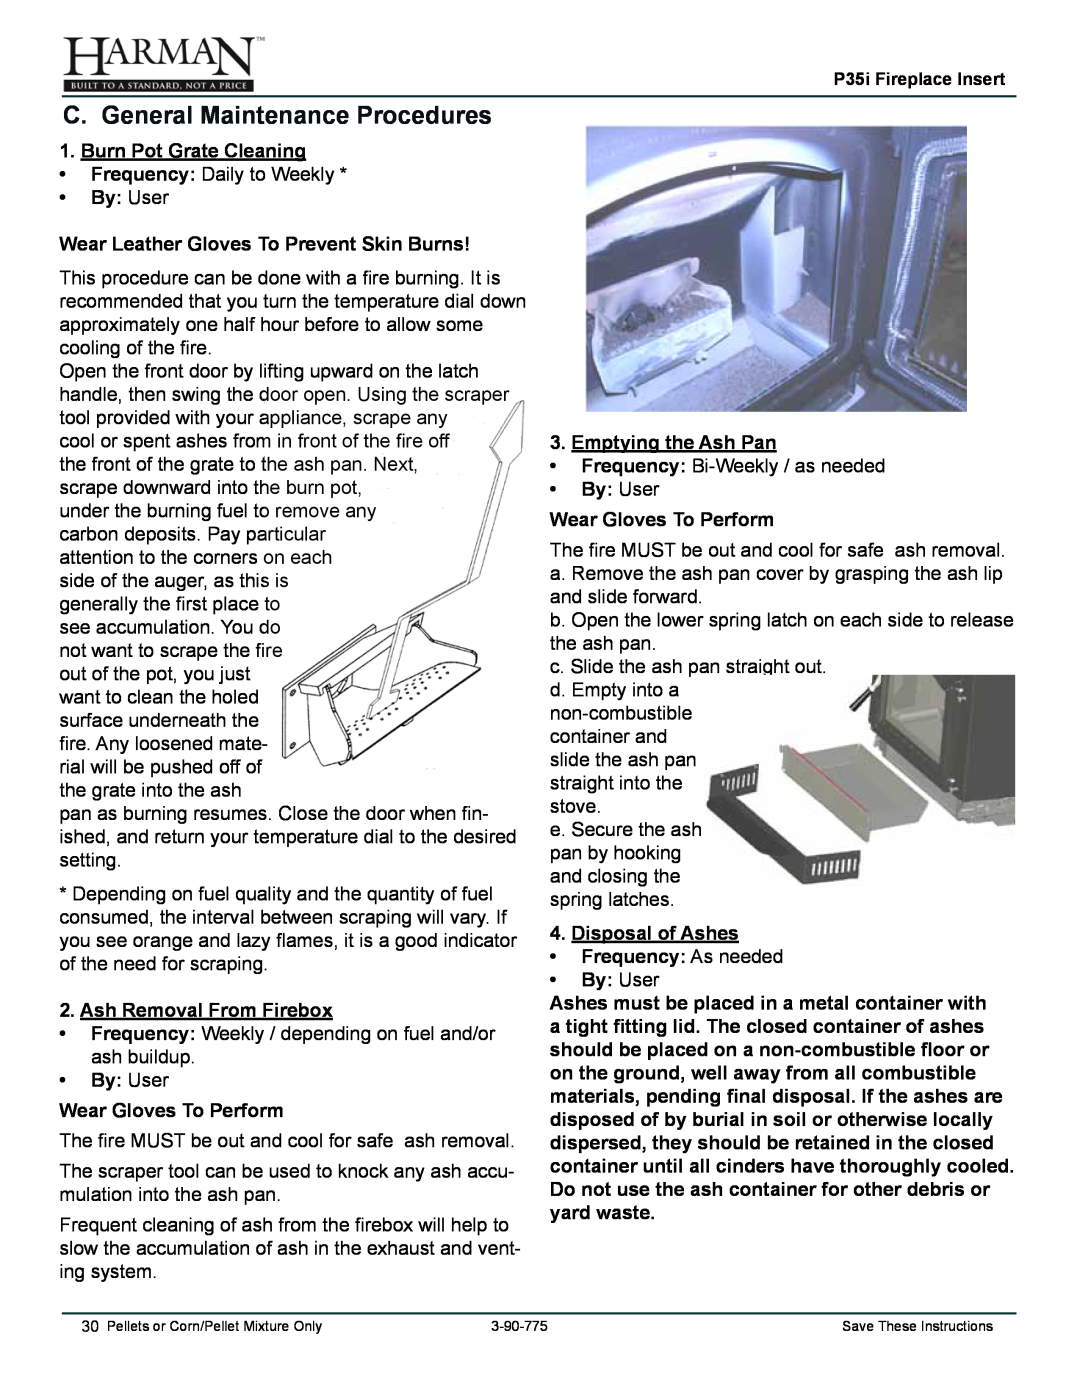 Harman Stove Company P35I owner manual C.General Maintenance Procedures 